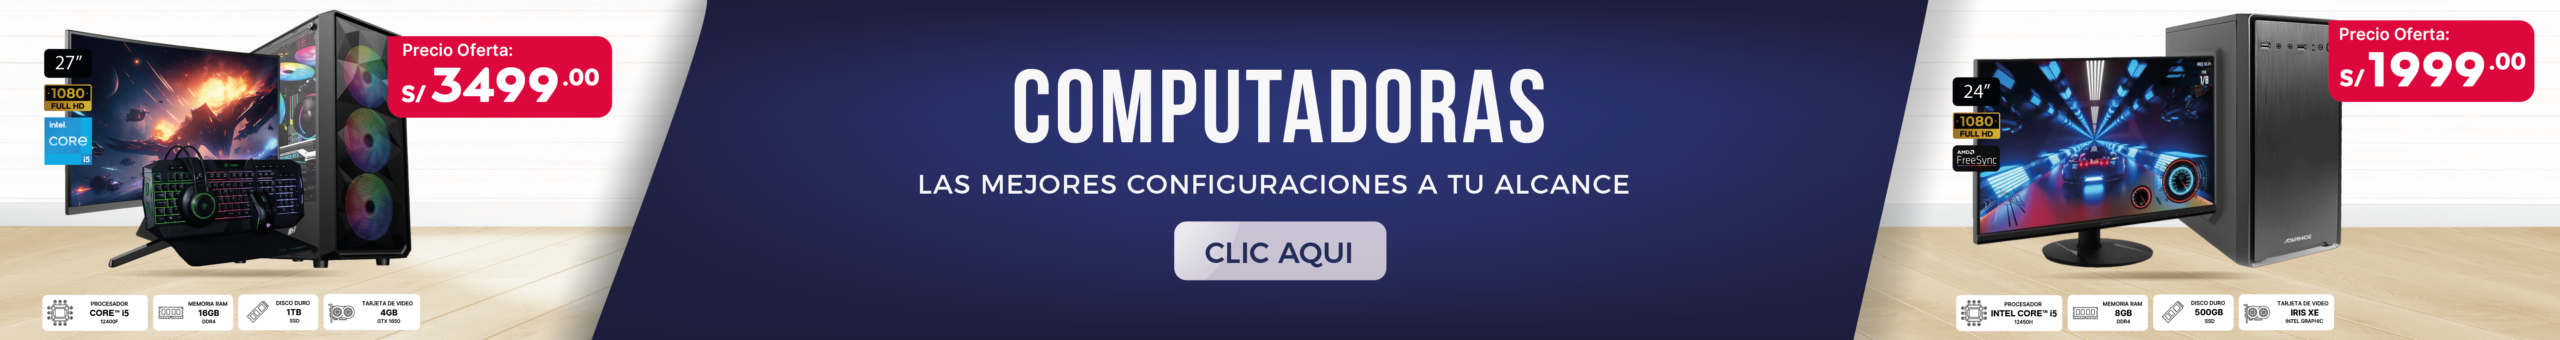 Banner promocional computadoras Julio